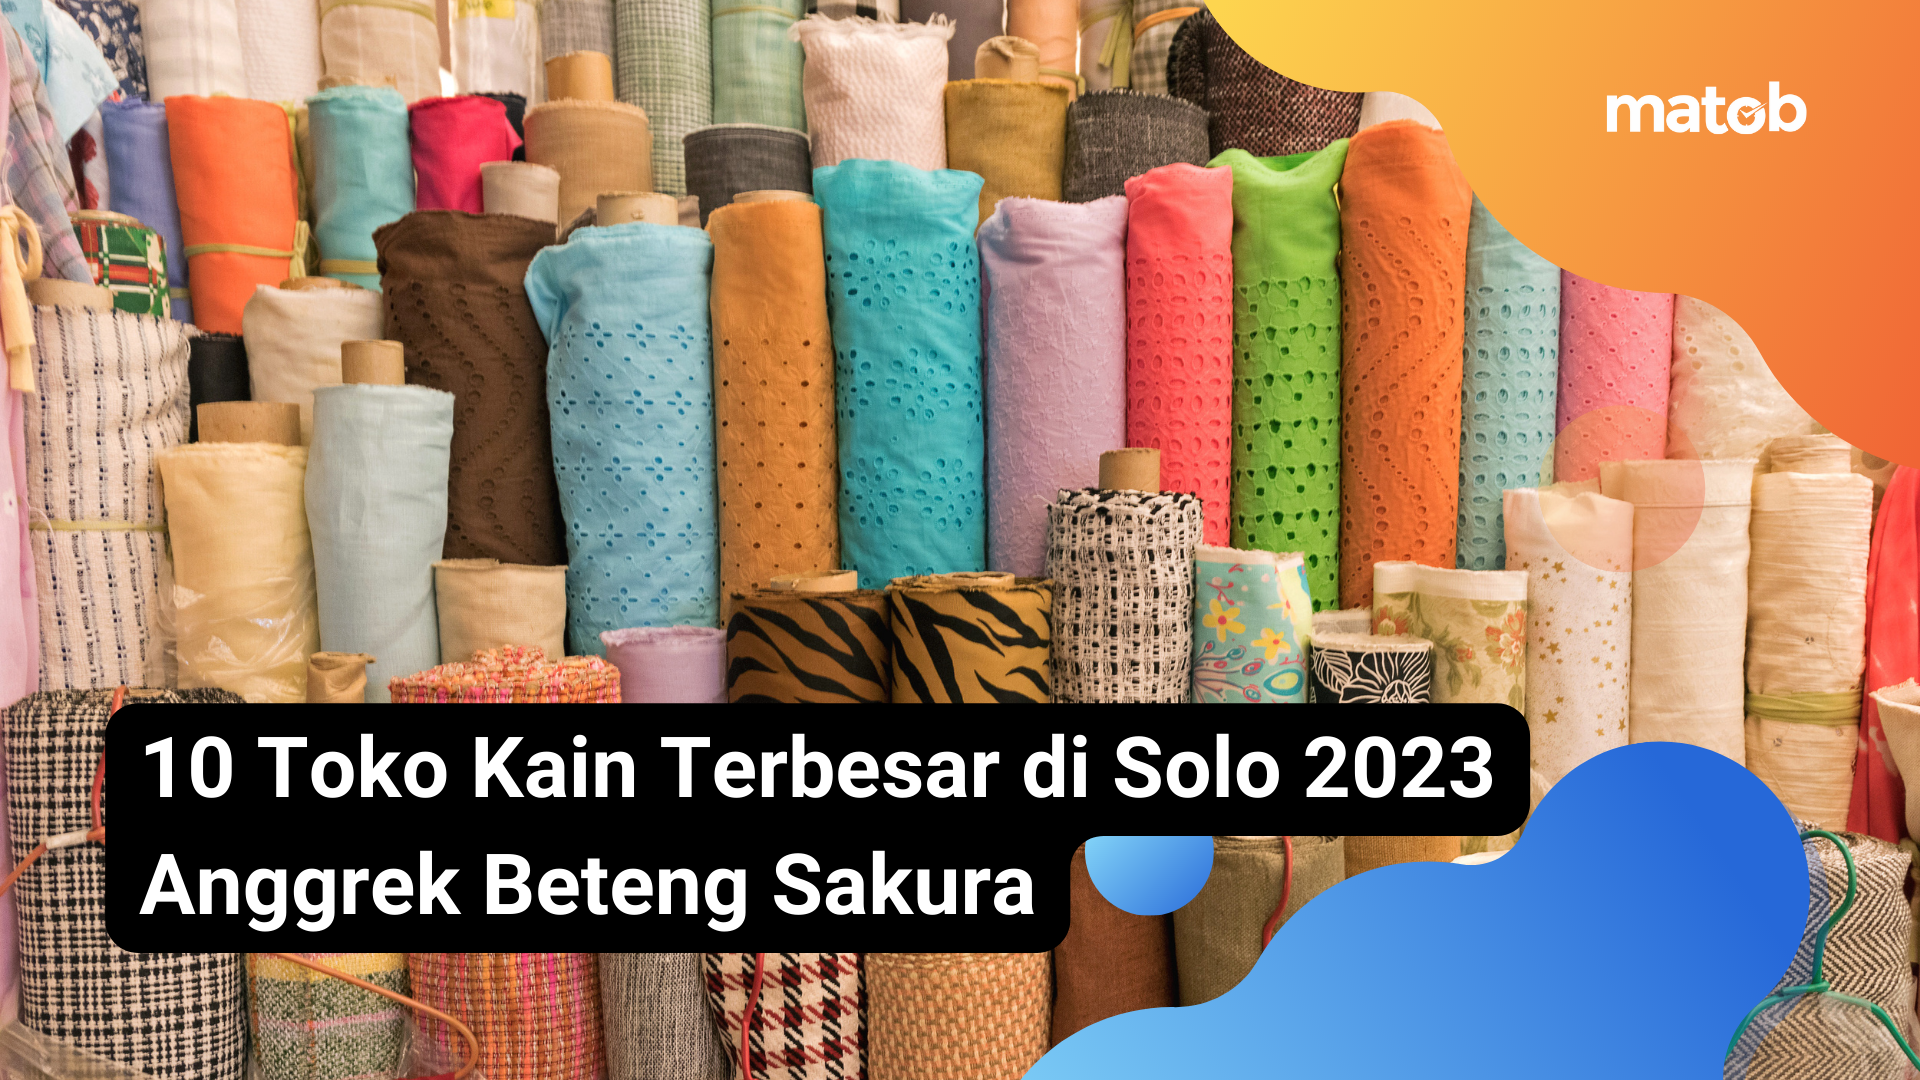 18 Matob Bisnis 10 Toko Kain Terbesar di Solo 2023 Anggrek Beteng Sakura